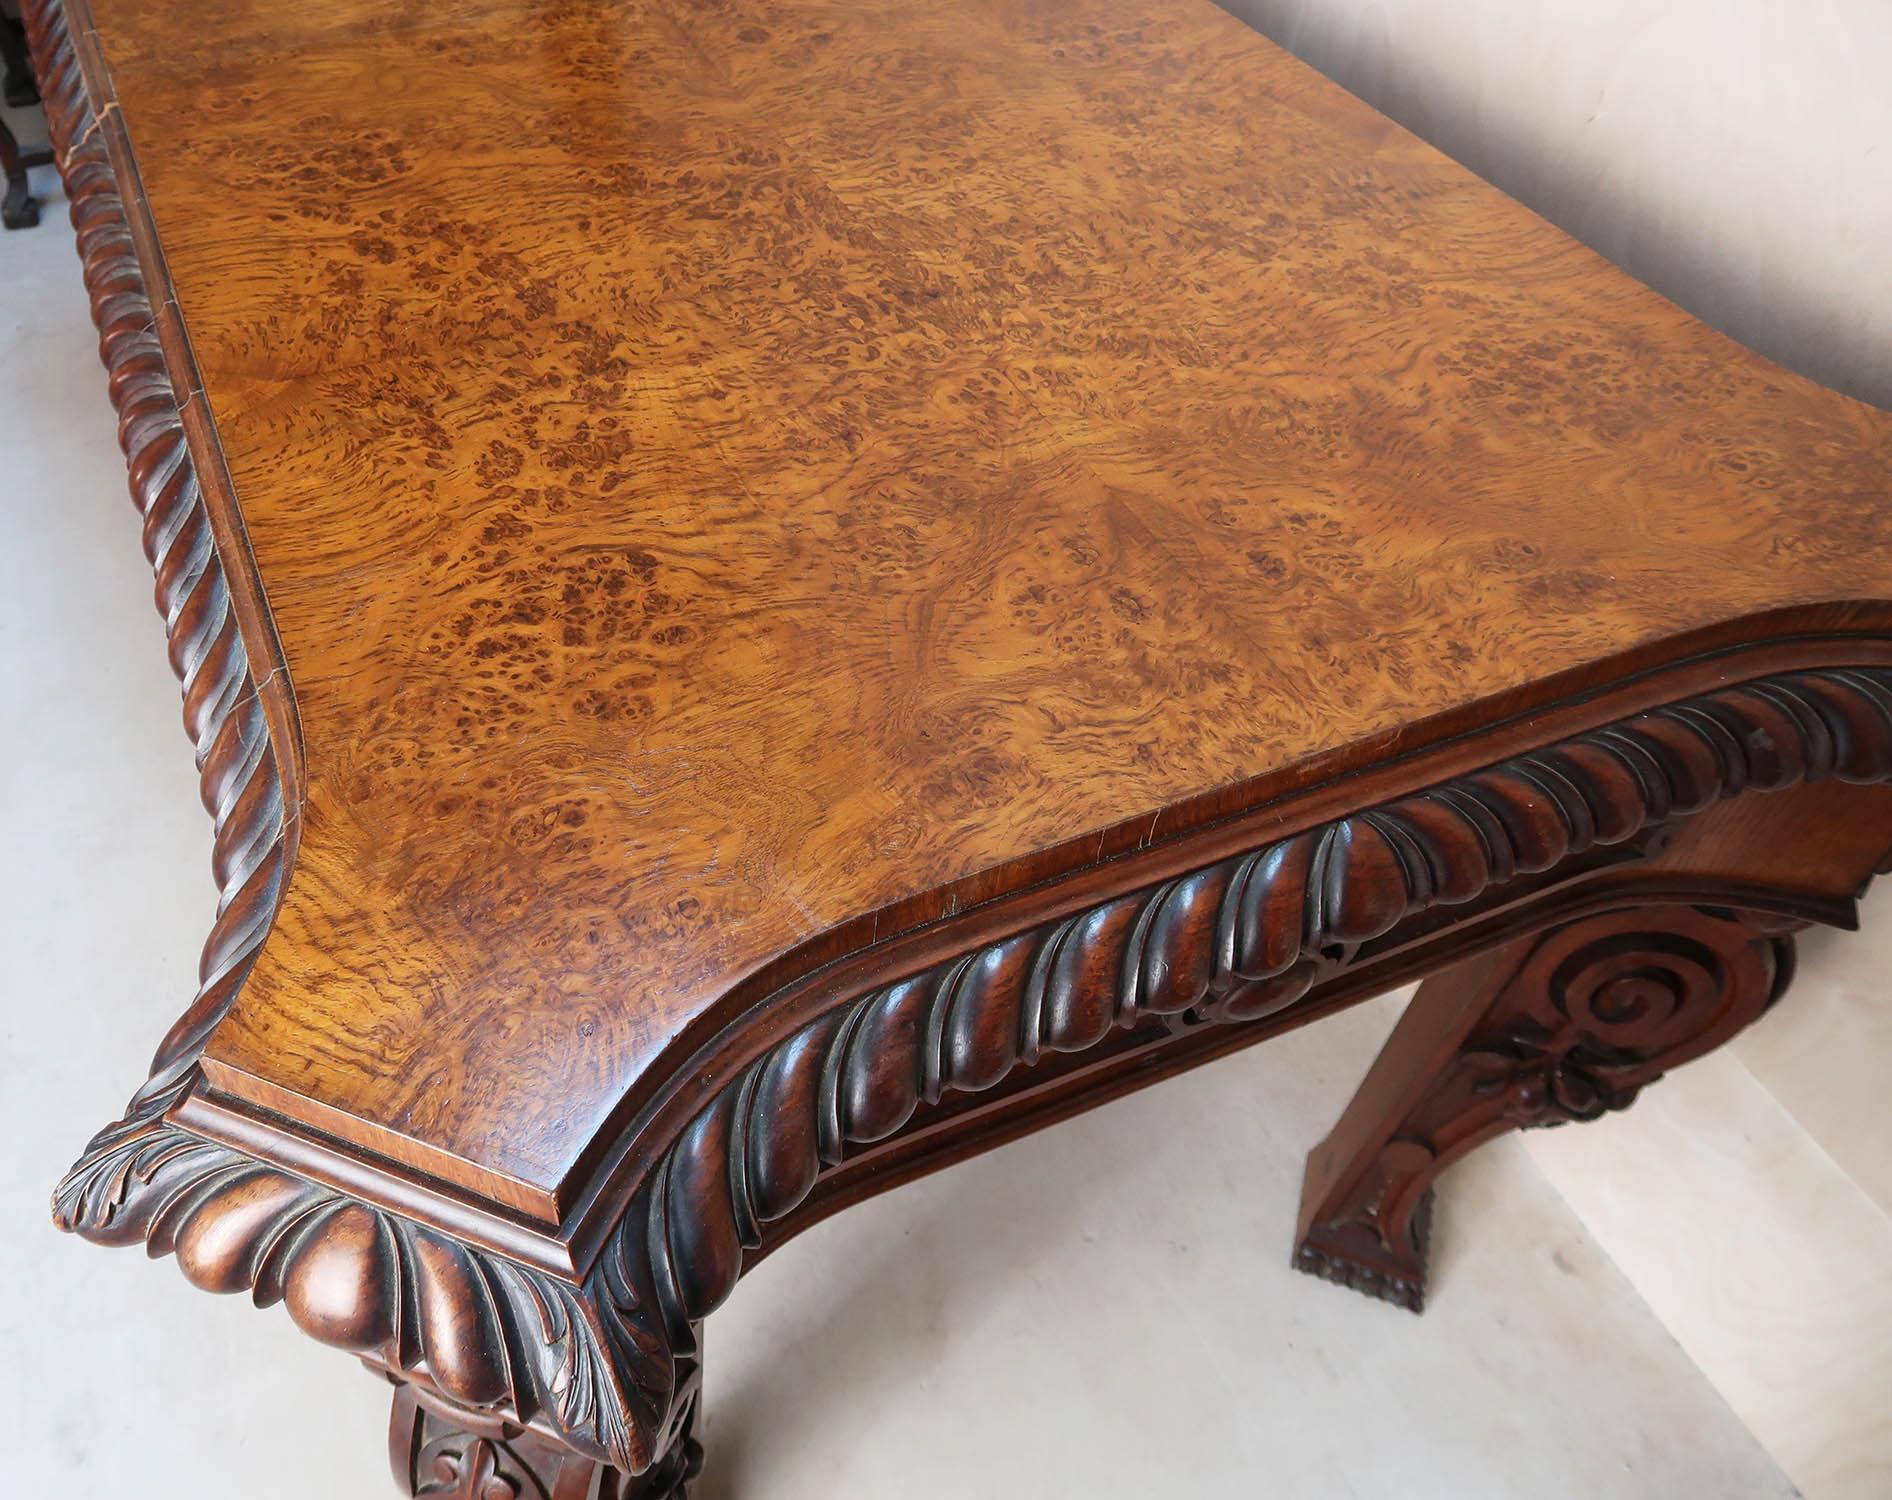 Large Antique Renaissance Revival Pollard Oak Table, circa 1835 In Good Condition For Sale In St Annes, Lancashire